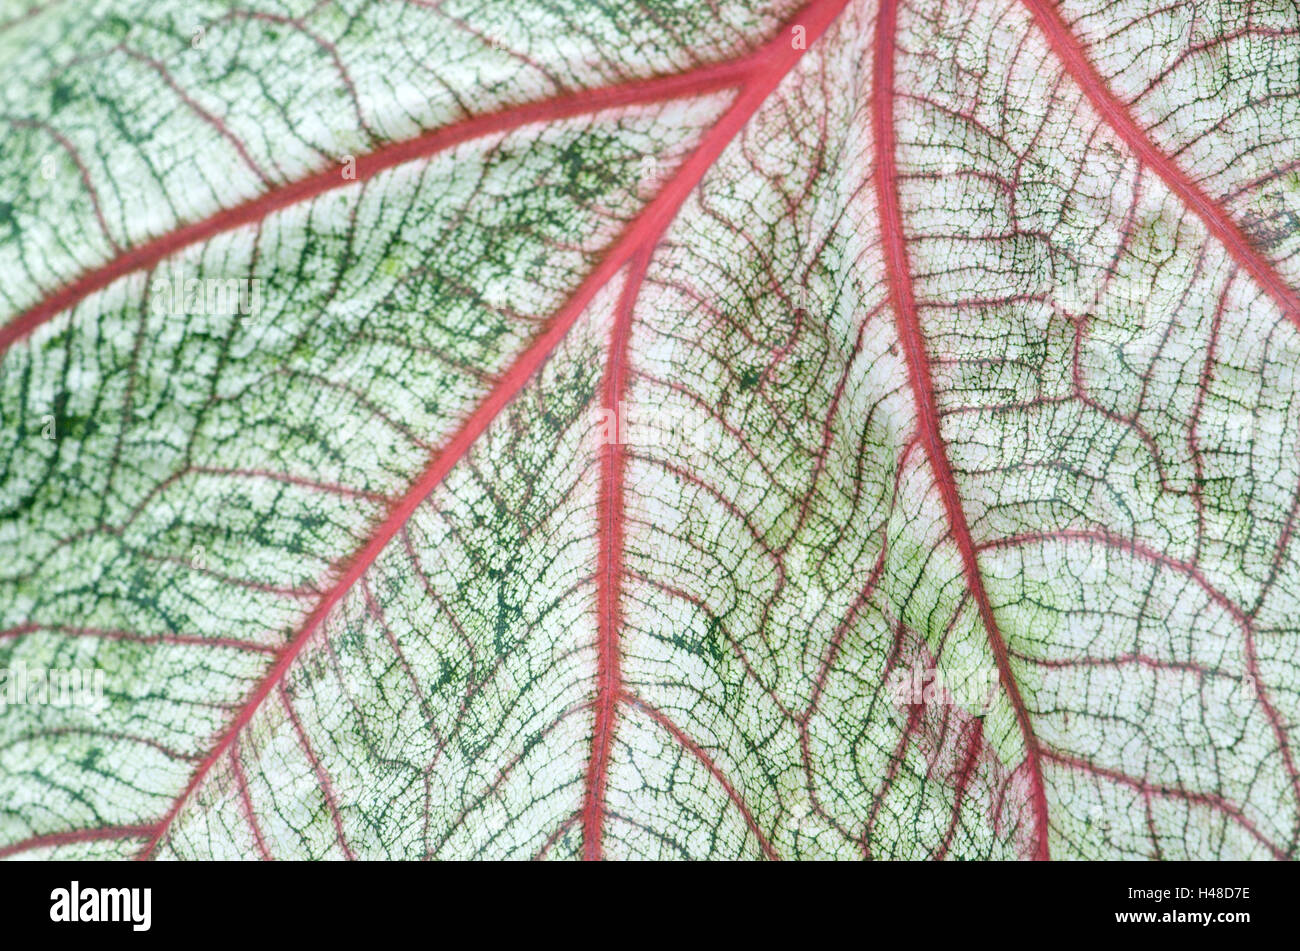 Leaf, green, red leaf-veins, close-up, Stock Photo